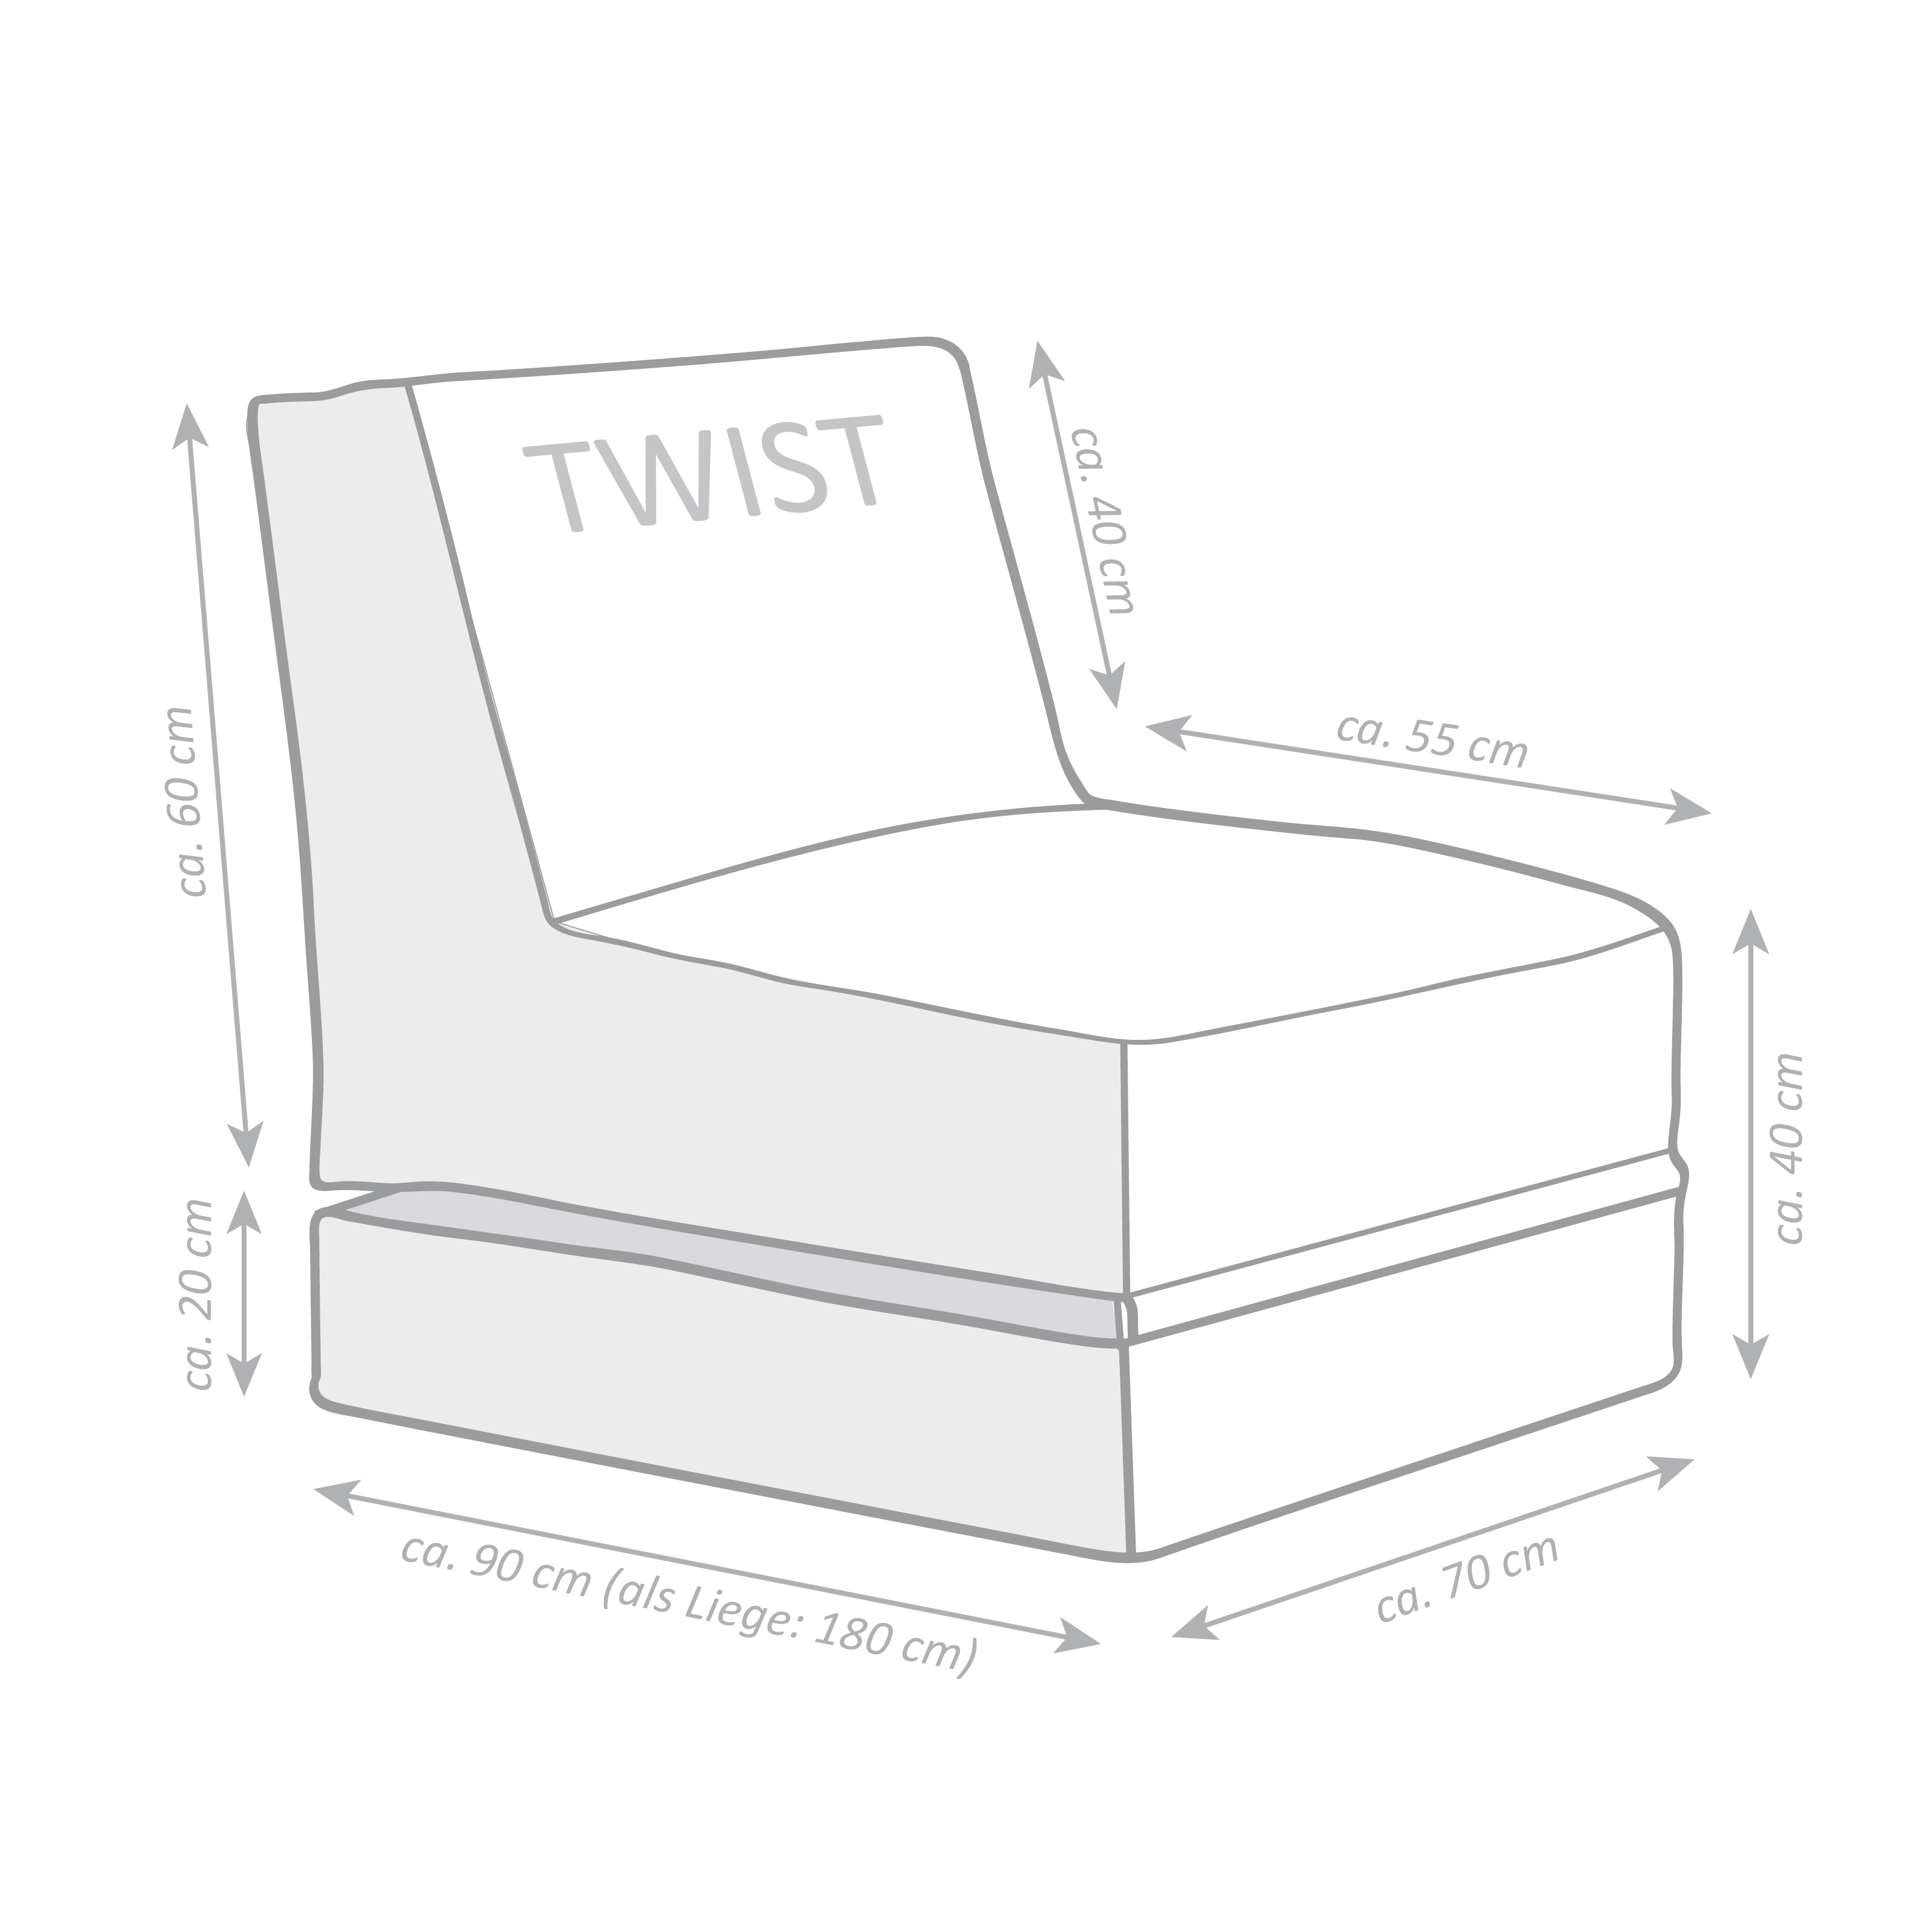 bei Sitting OBI kaufen Twist Point Khaki Scuba Sitzsack